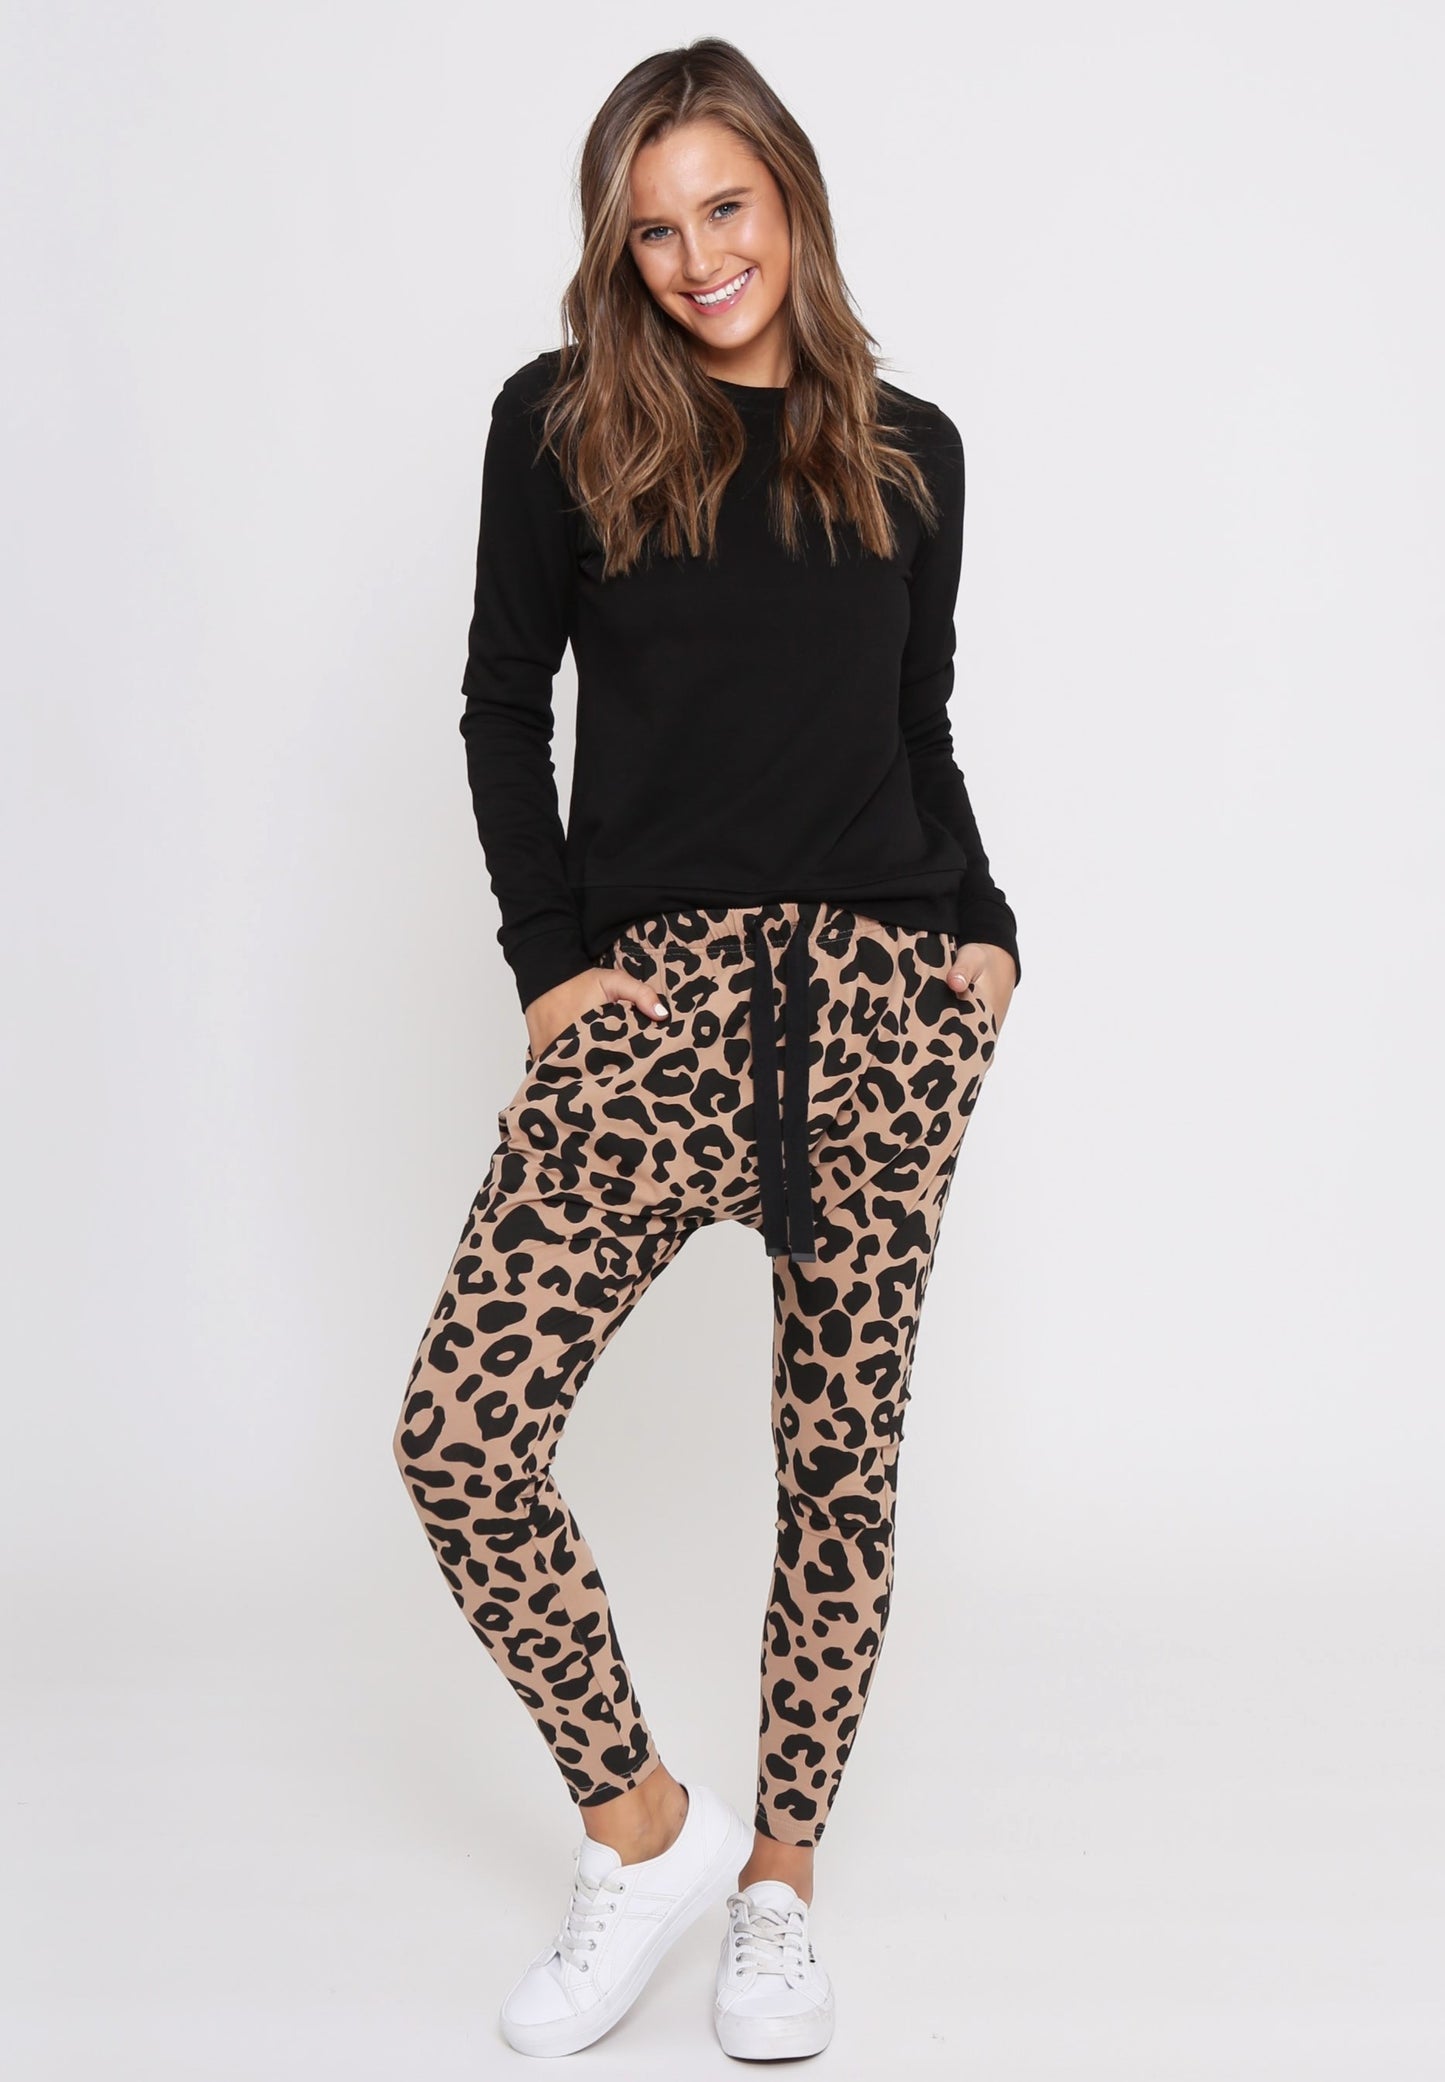 tan camel coloured leopard print jogger pants super comfy style